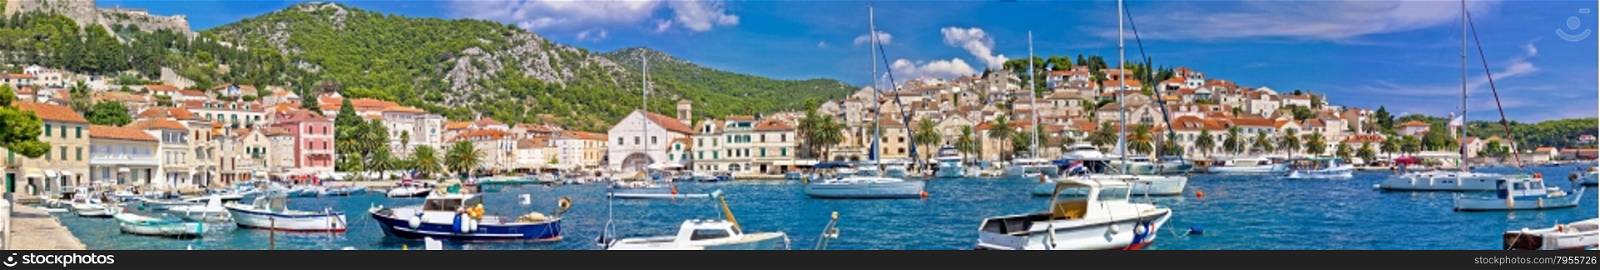 Hvar yachting harbor and historic architecture panoramic view, Dalmatia, Croatia